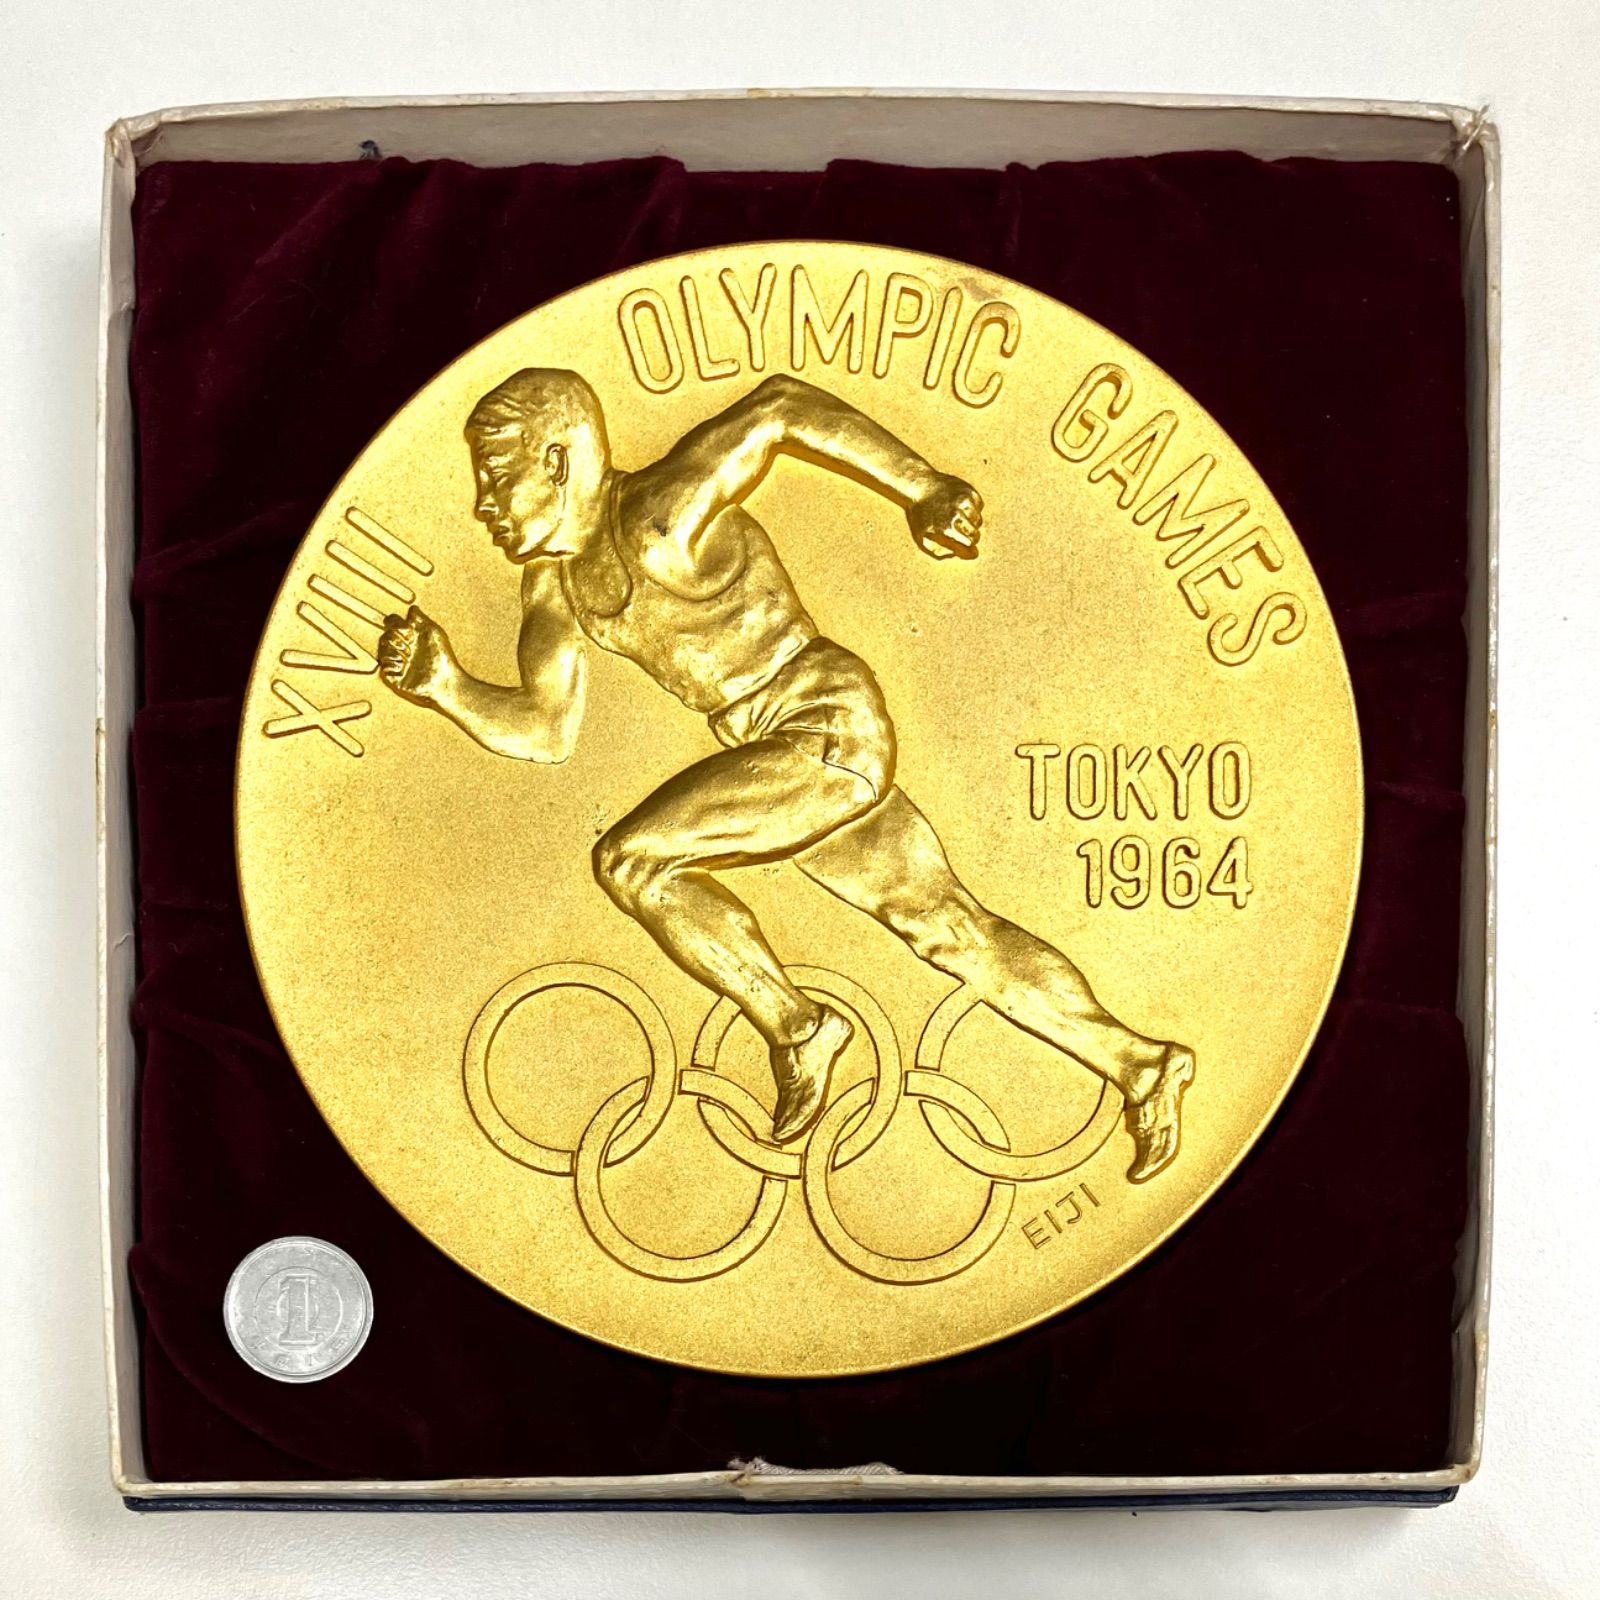 🇯🇵TOKYO 1964 東京オリンピック 記念盾メダル型置物 ランナー - メルカリ